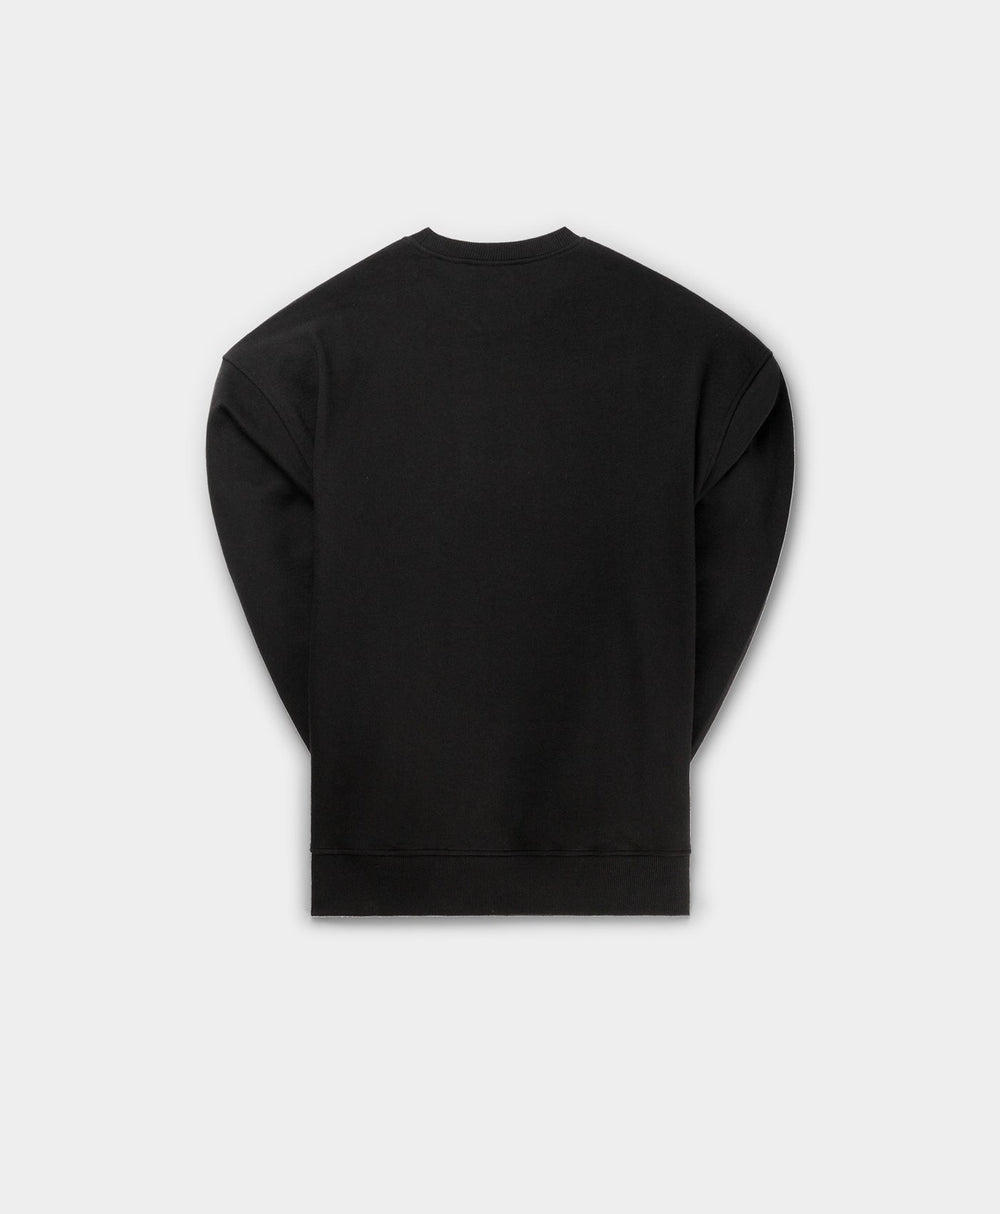 DP - Black Enjata Sweater - Packshot - Rear